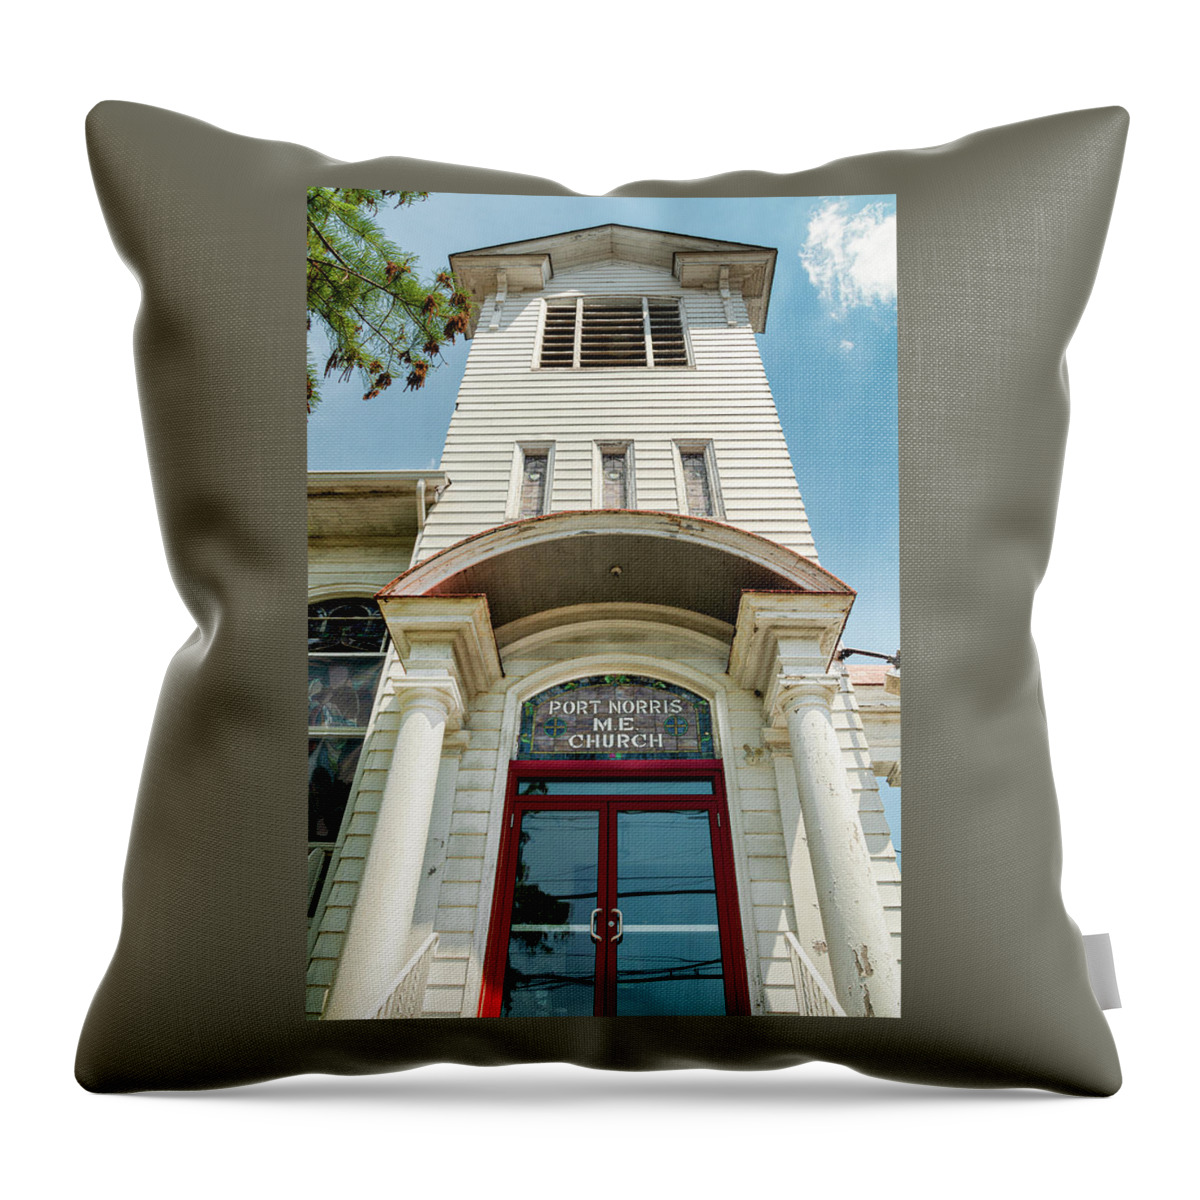 Port Norris Throw Pillow featuring the photograph Port Norris Methodist Church Entrance by Kristia Adams